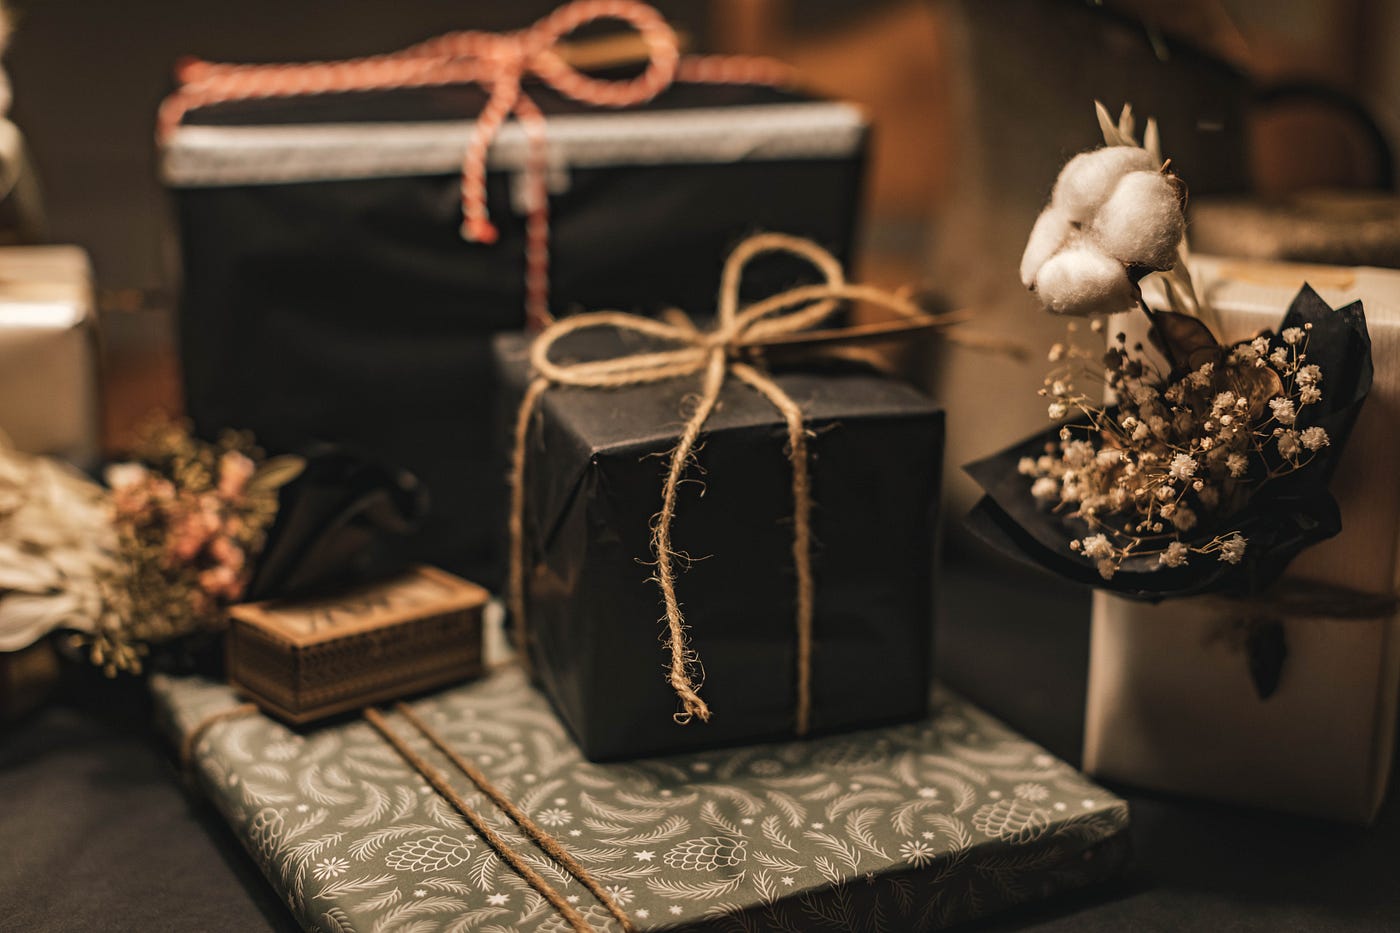 Gold Ribbon for Gift Wrapping, Christmas, Hanukkah, Kwanzaa and